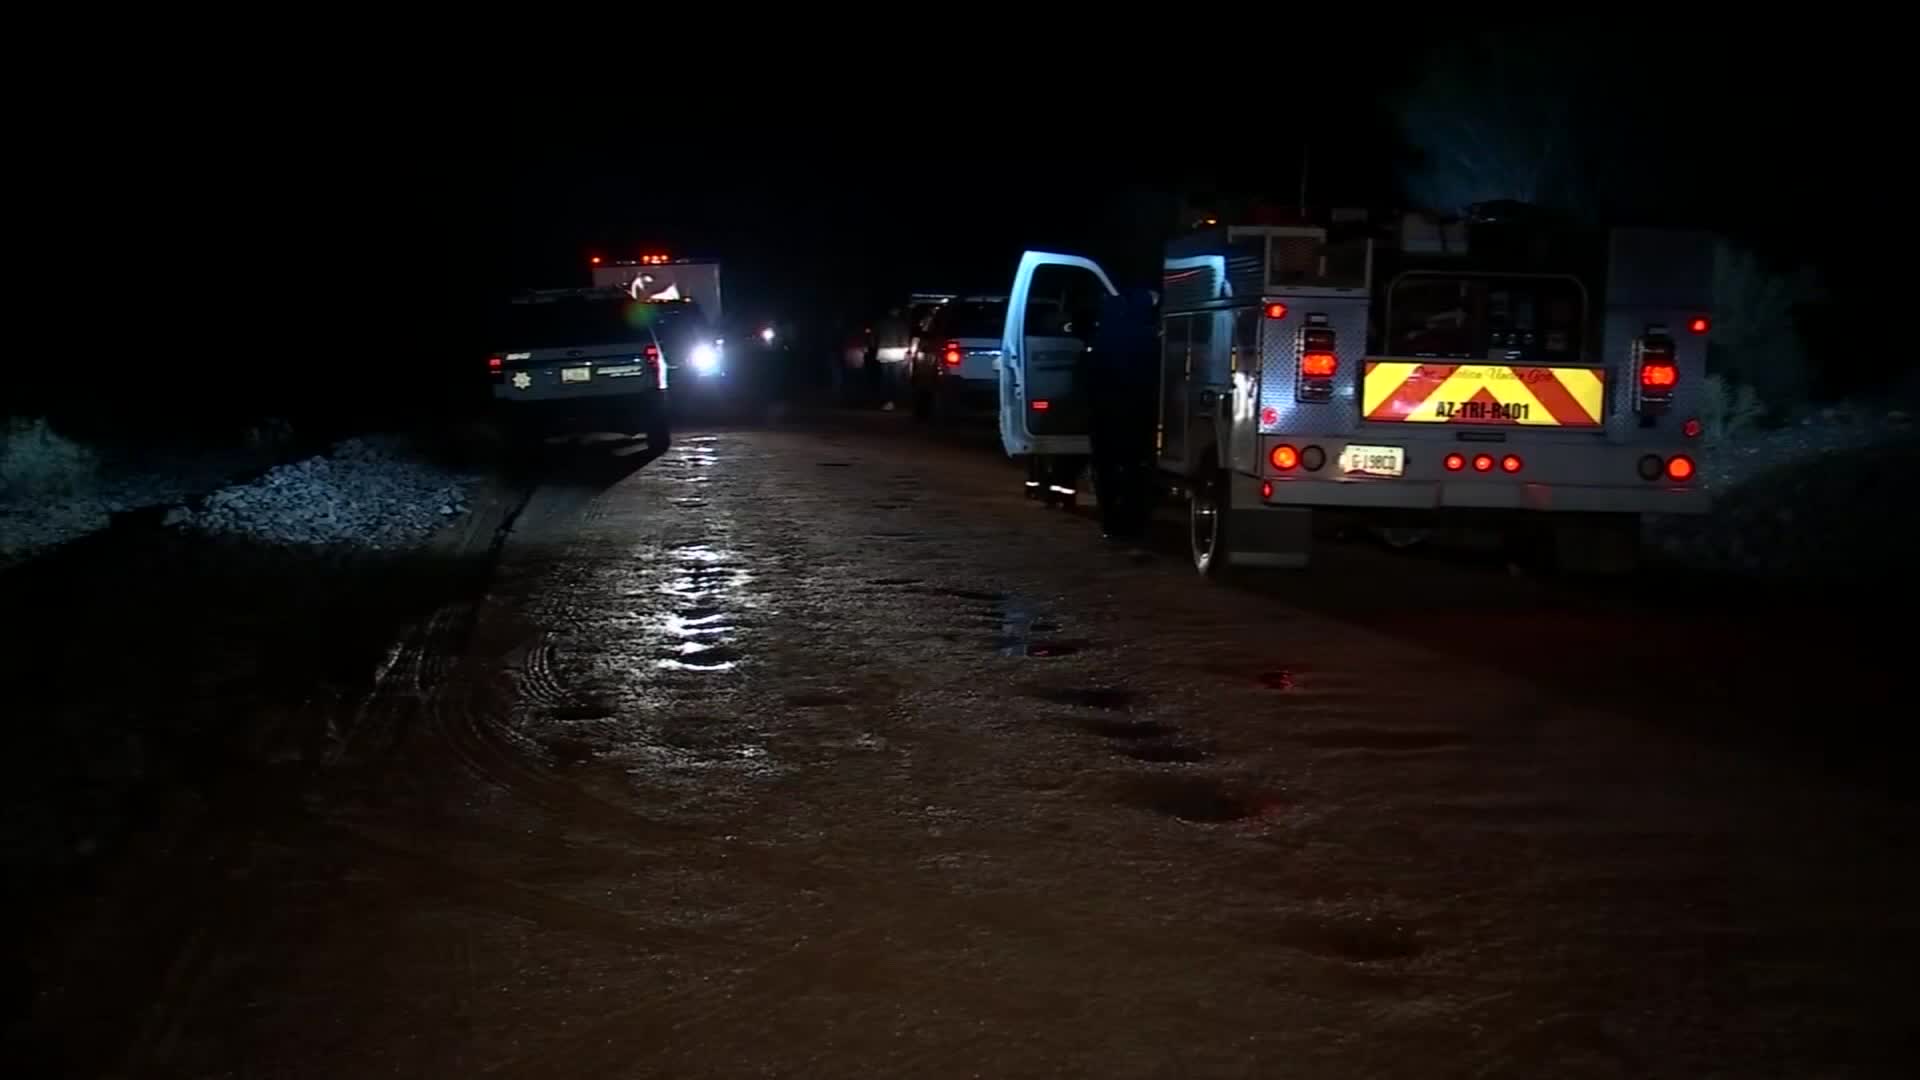 3 Children Are Missing After Flash Flood In Arizona Cnn Video